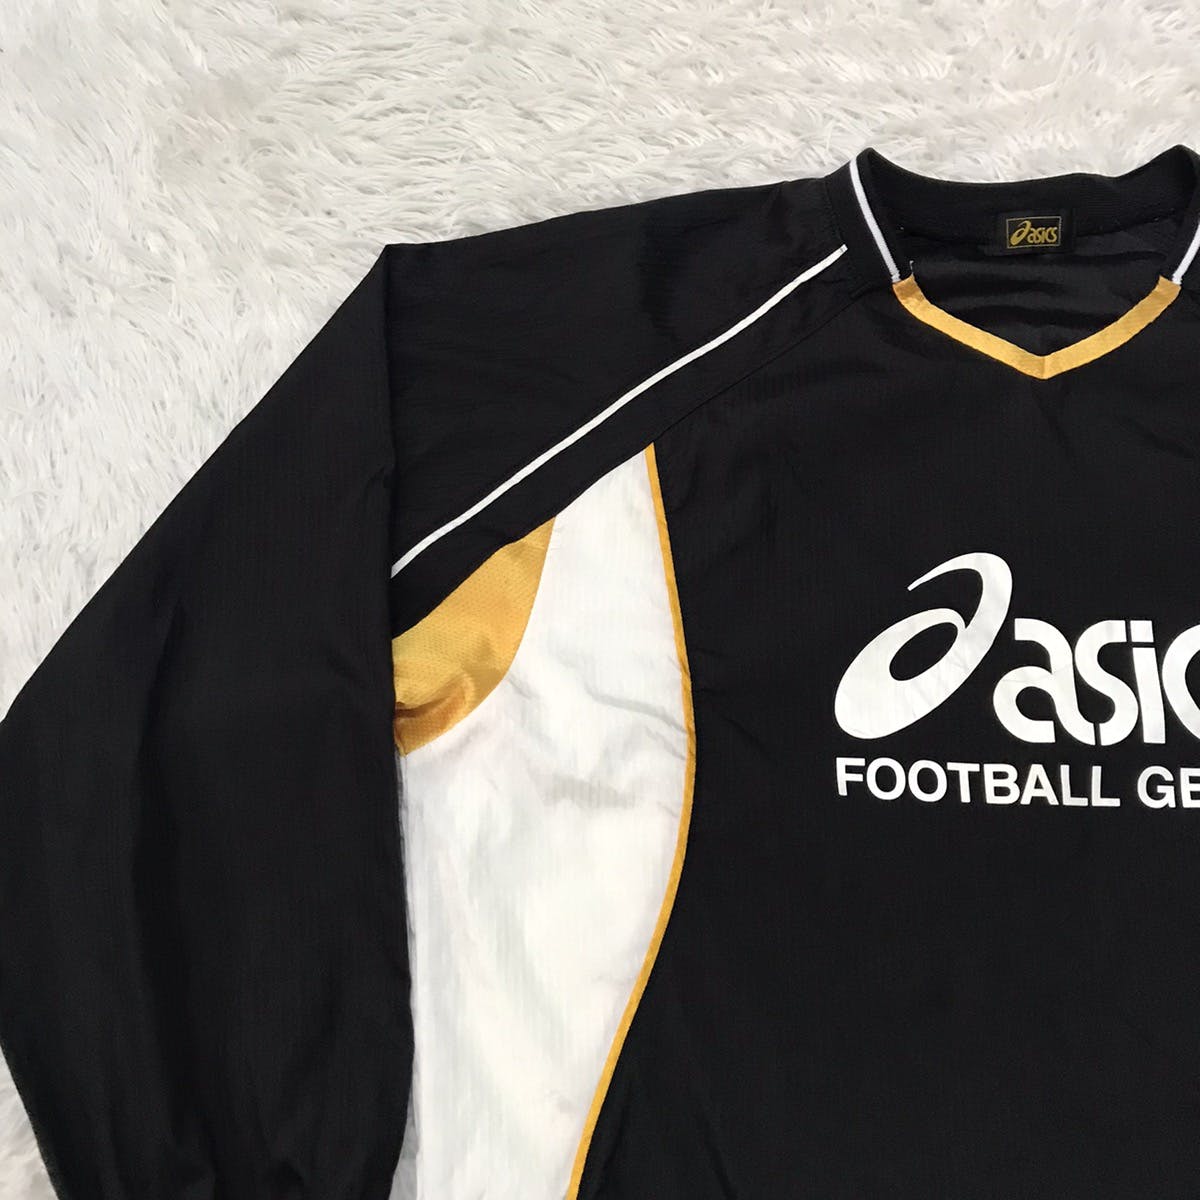 Asics football gear long sleeves - 2